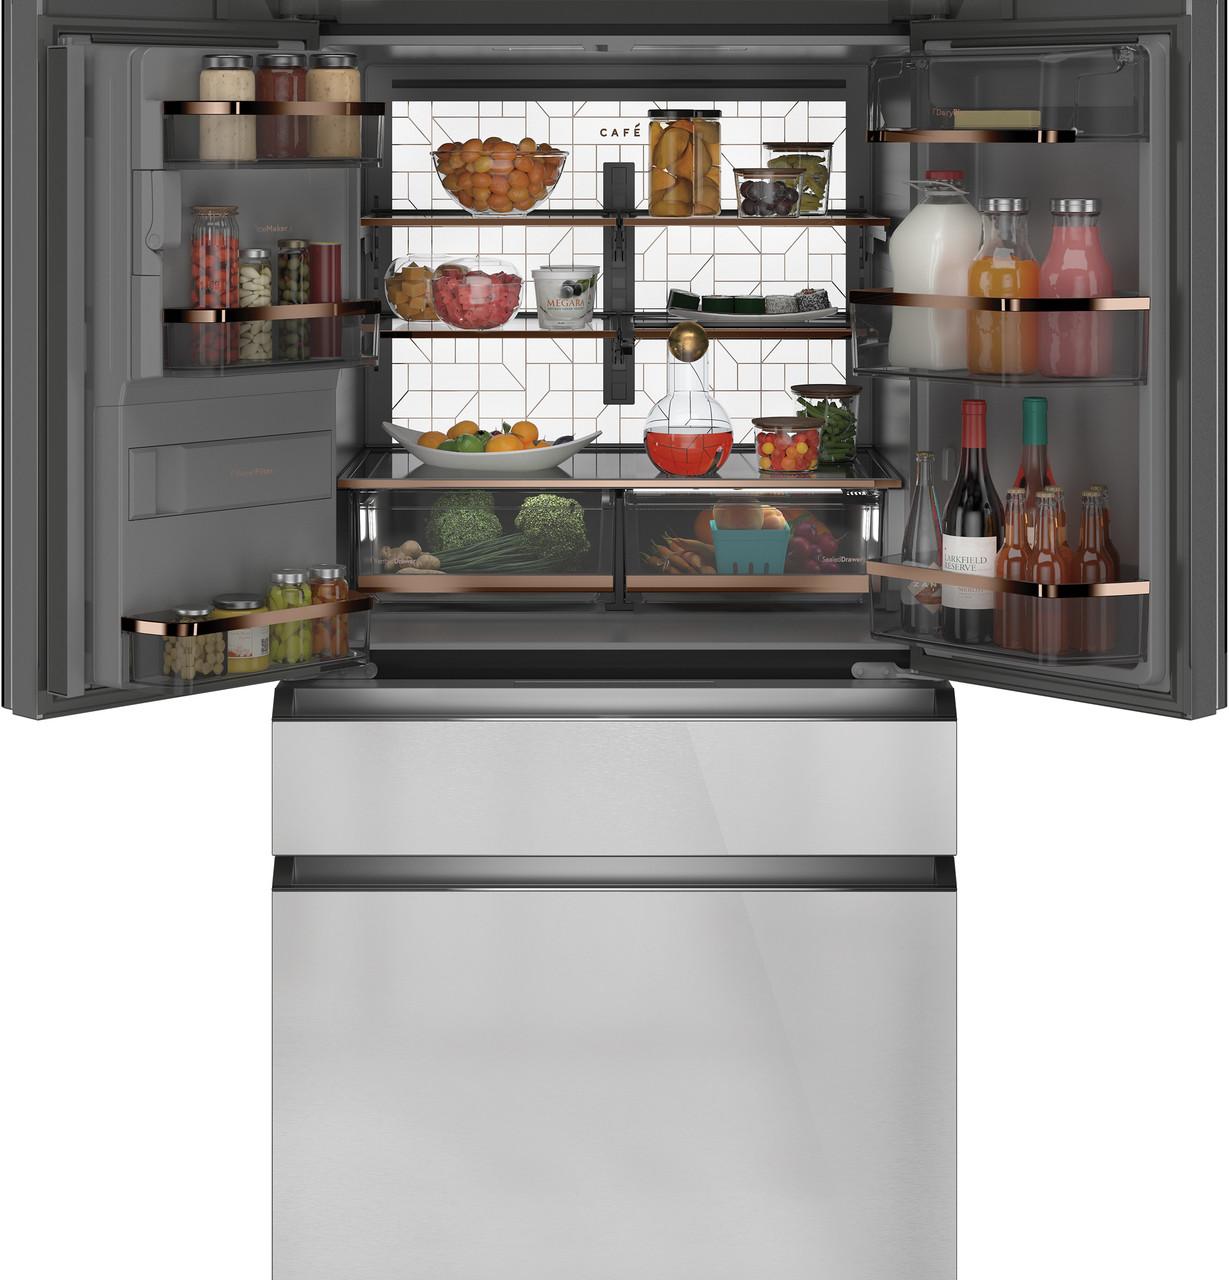 Cafe Caf(eback)™ ENERGY STAR® 22.3 Cu. Ft. Smart Counter-Depth 4-Door French-Door Refrigerator in Platinum Glass